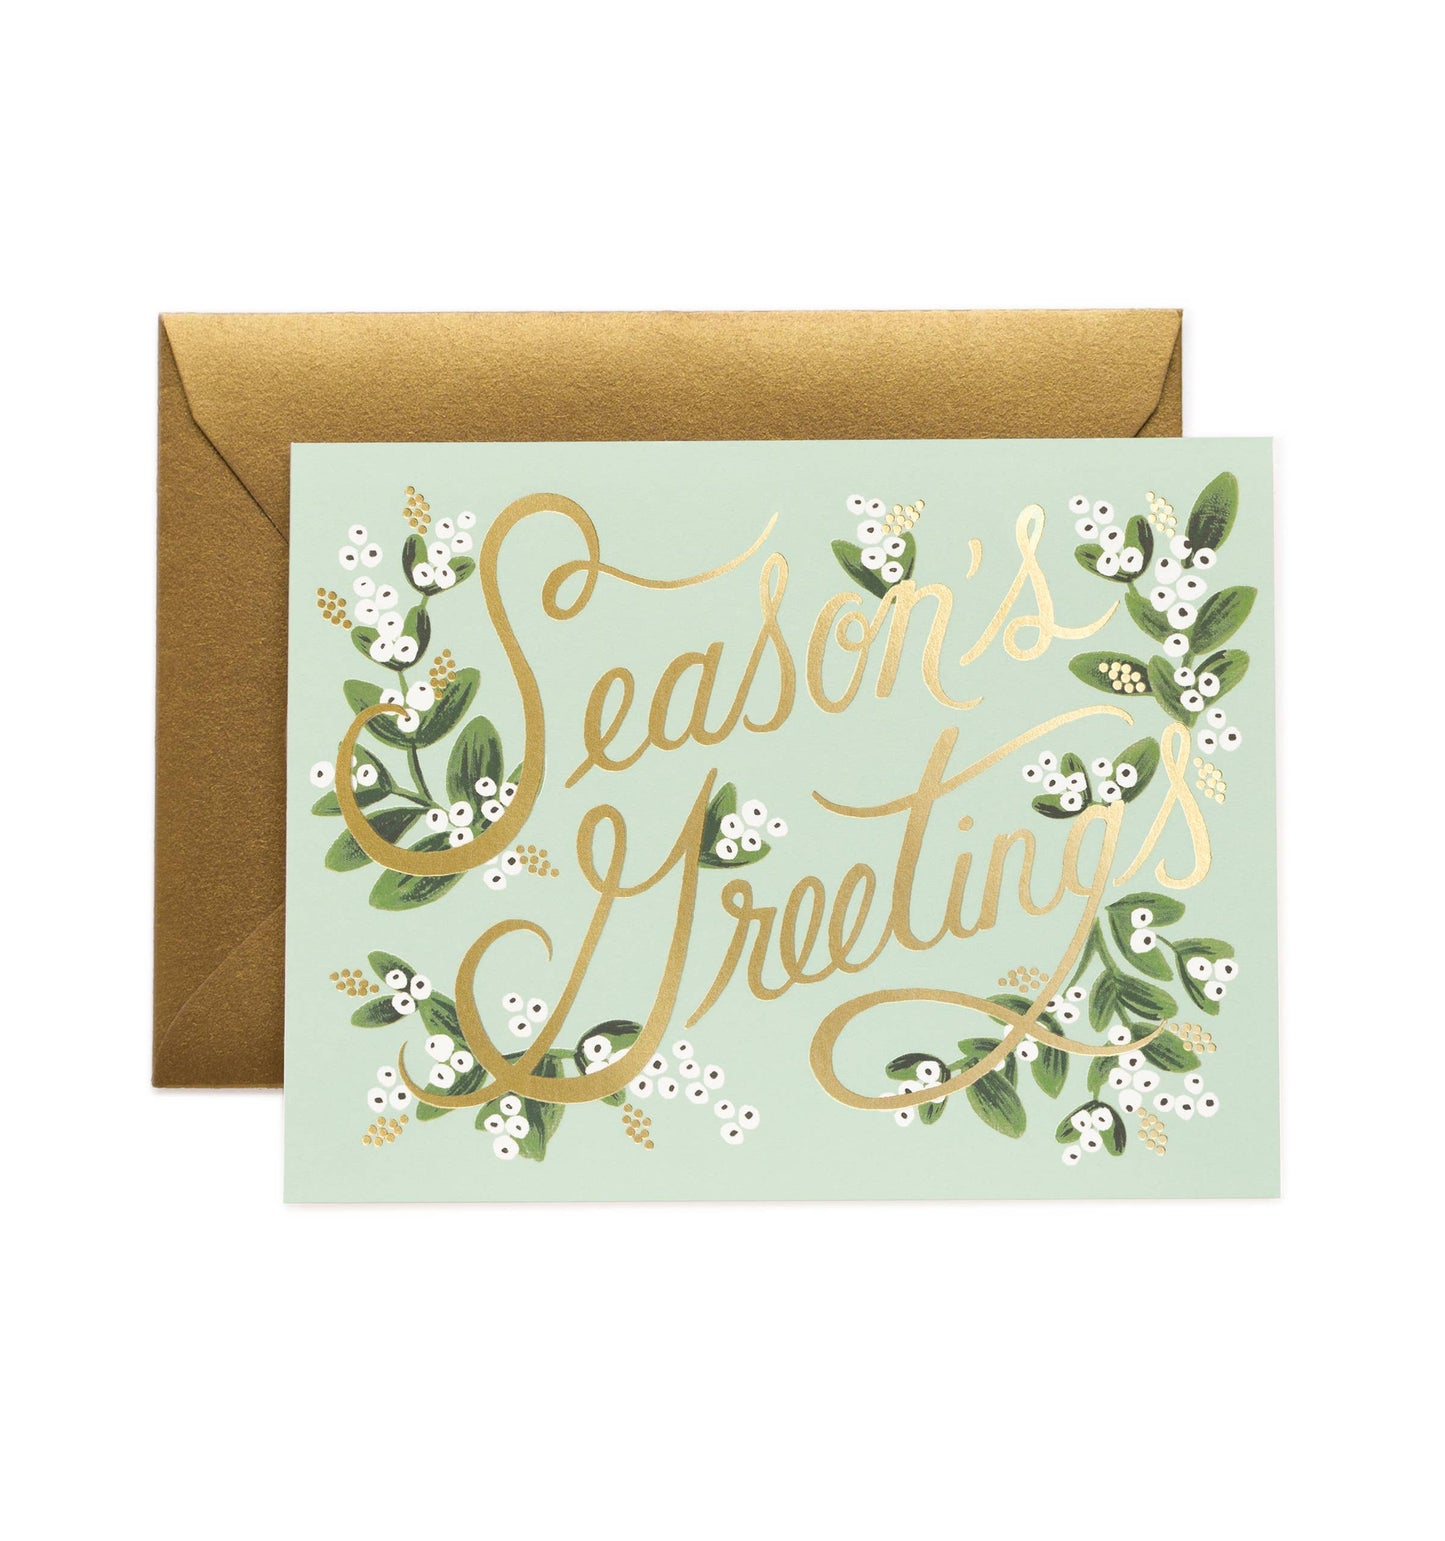 Boxed set of Mistletoe Season's Greetings Card